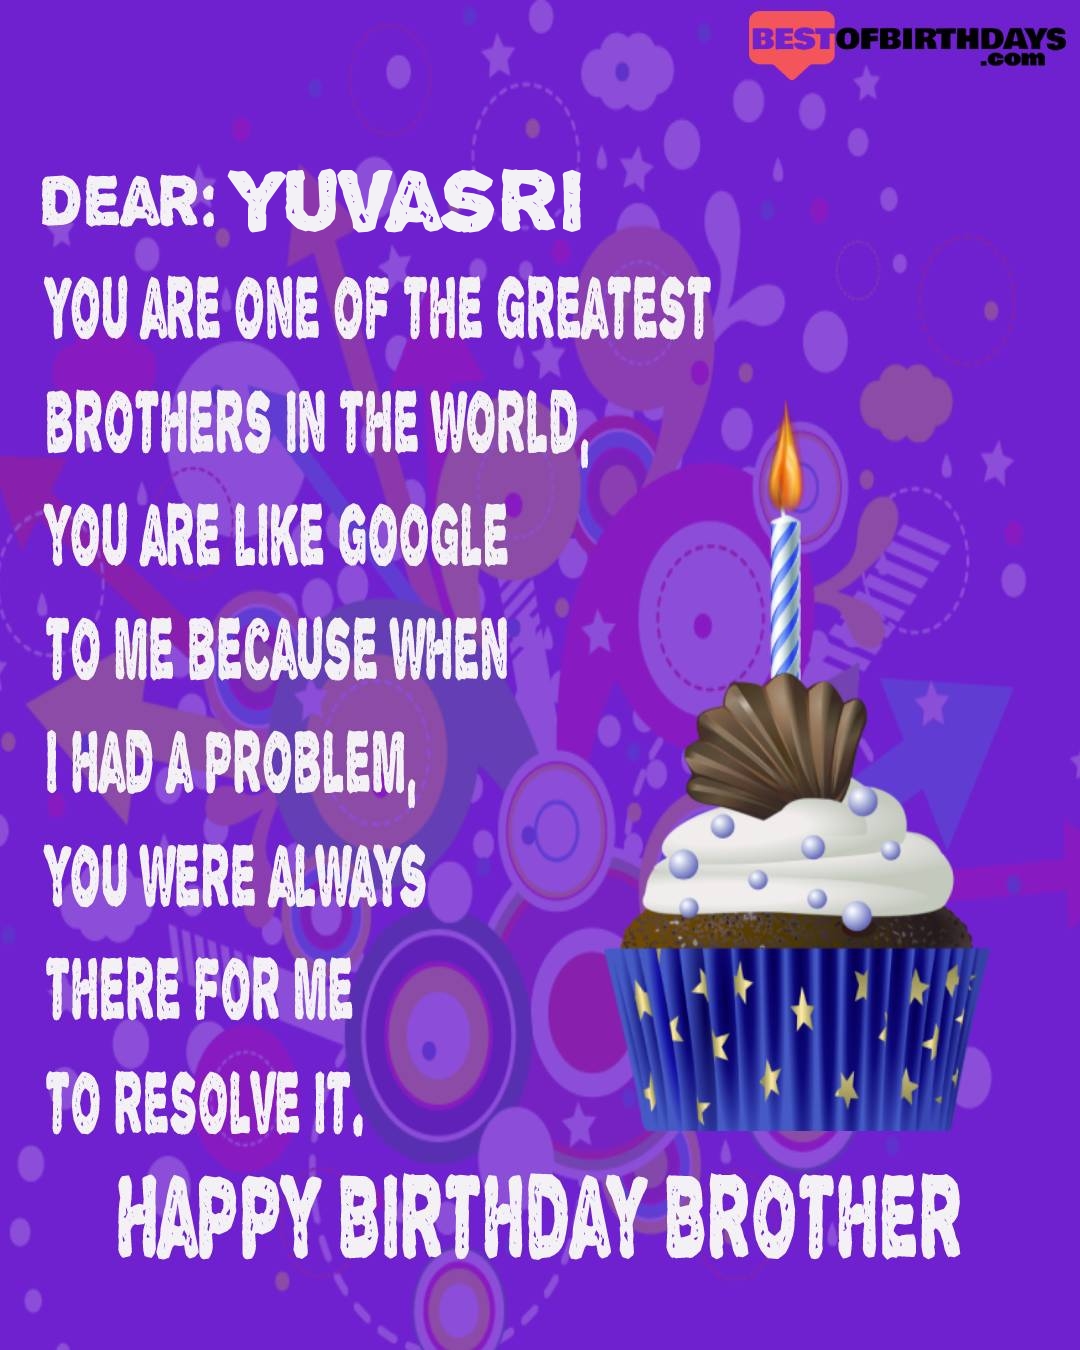 Happy birthday yuvasri bhai brother bro